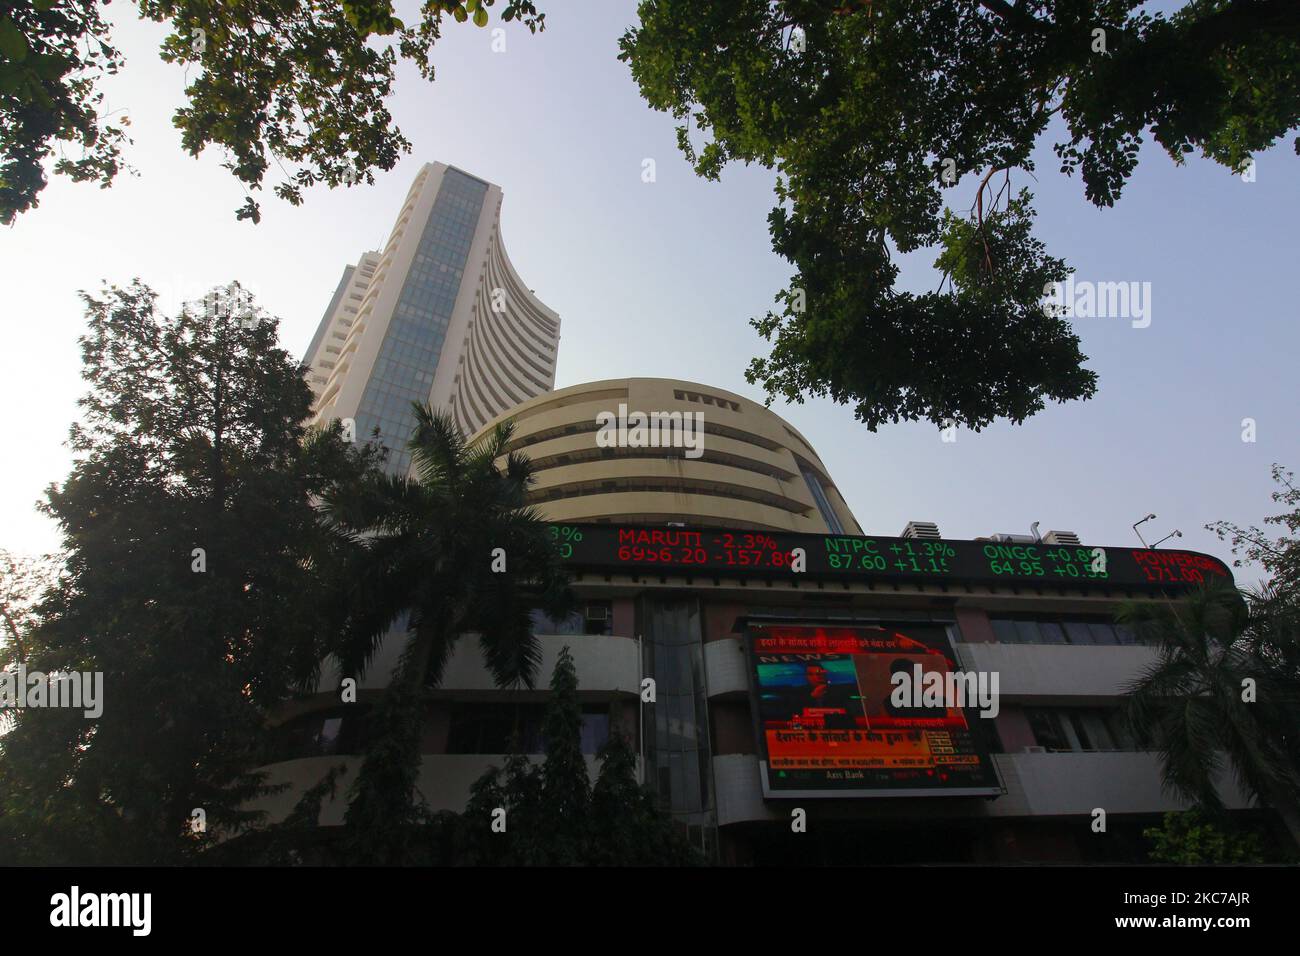 The Bombay Stock Exchange (BSE) building is seen in Mumbai, India on January 11, 2021. (Photo by Himanshu Bhatt/NurPhoto) Stock Photo